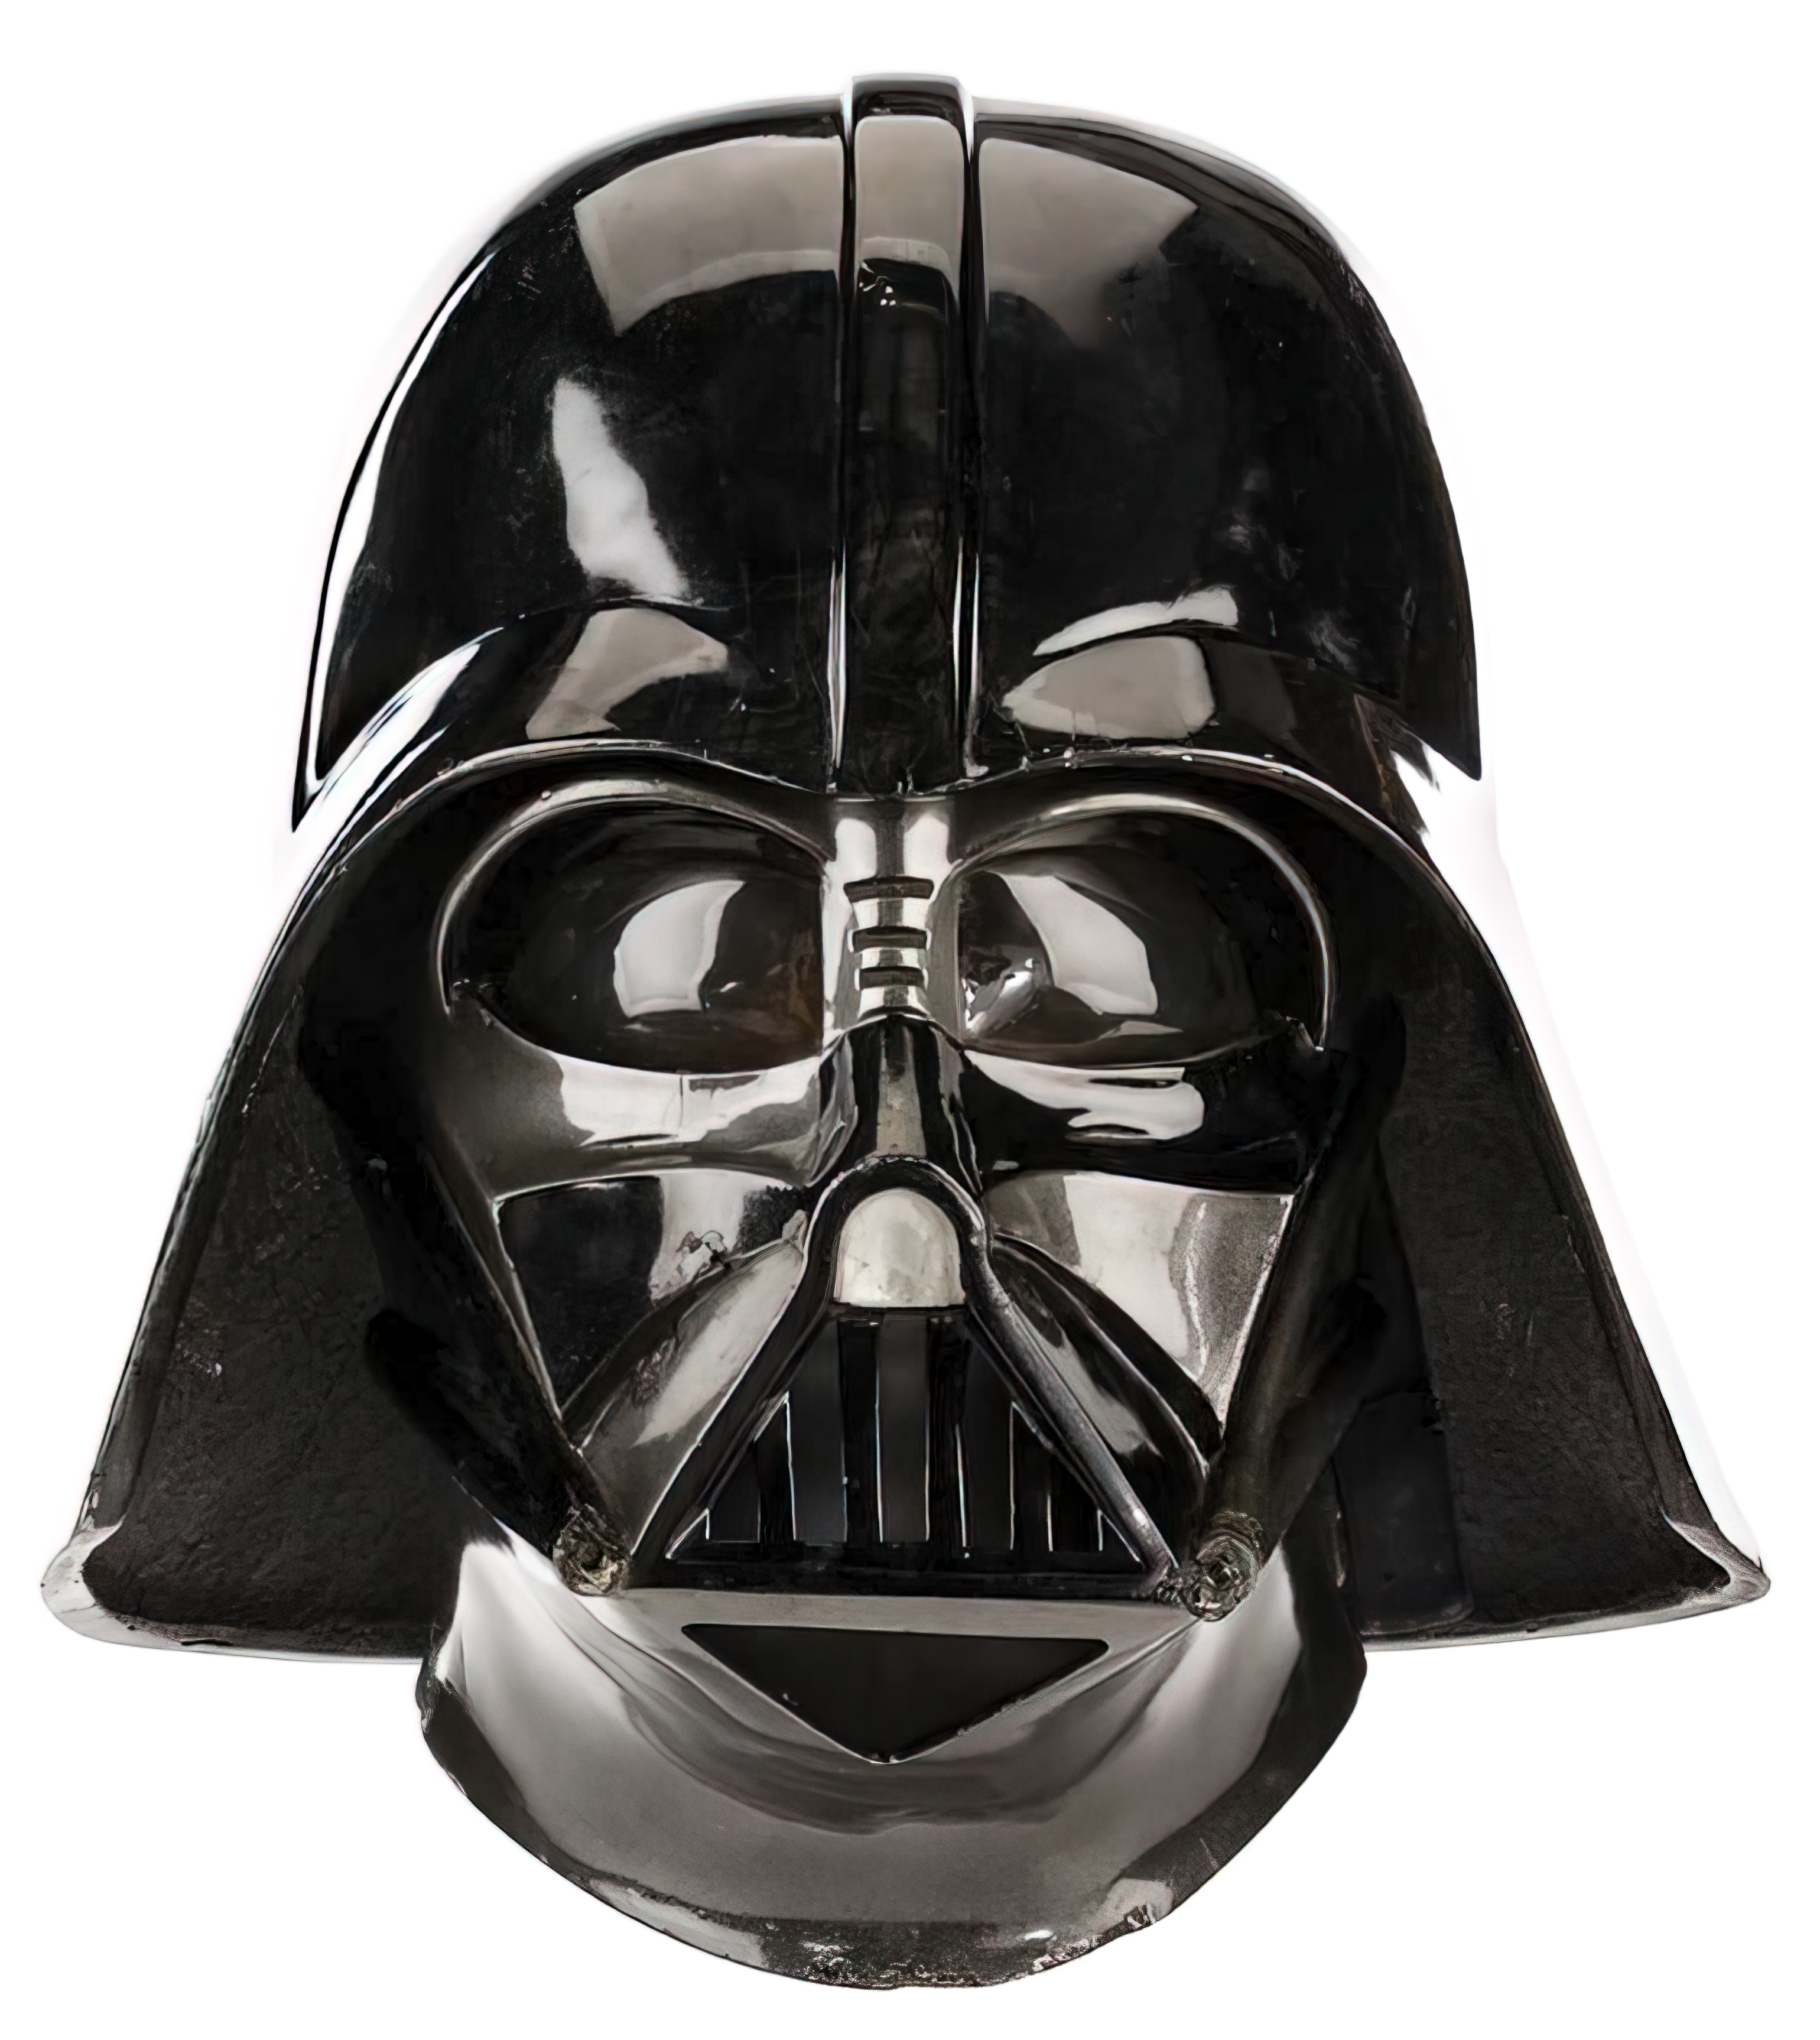 David-Prowse-Darth-Vader-Mask-and-Helmet-2-Edit.jpg